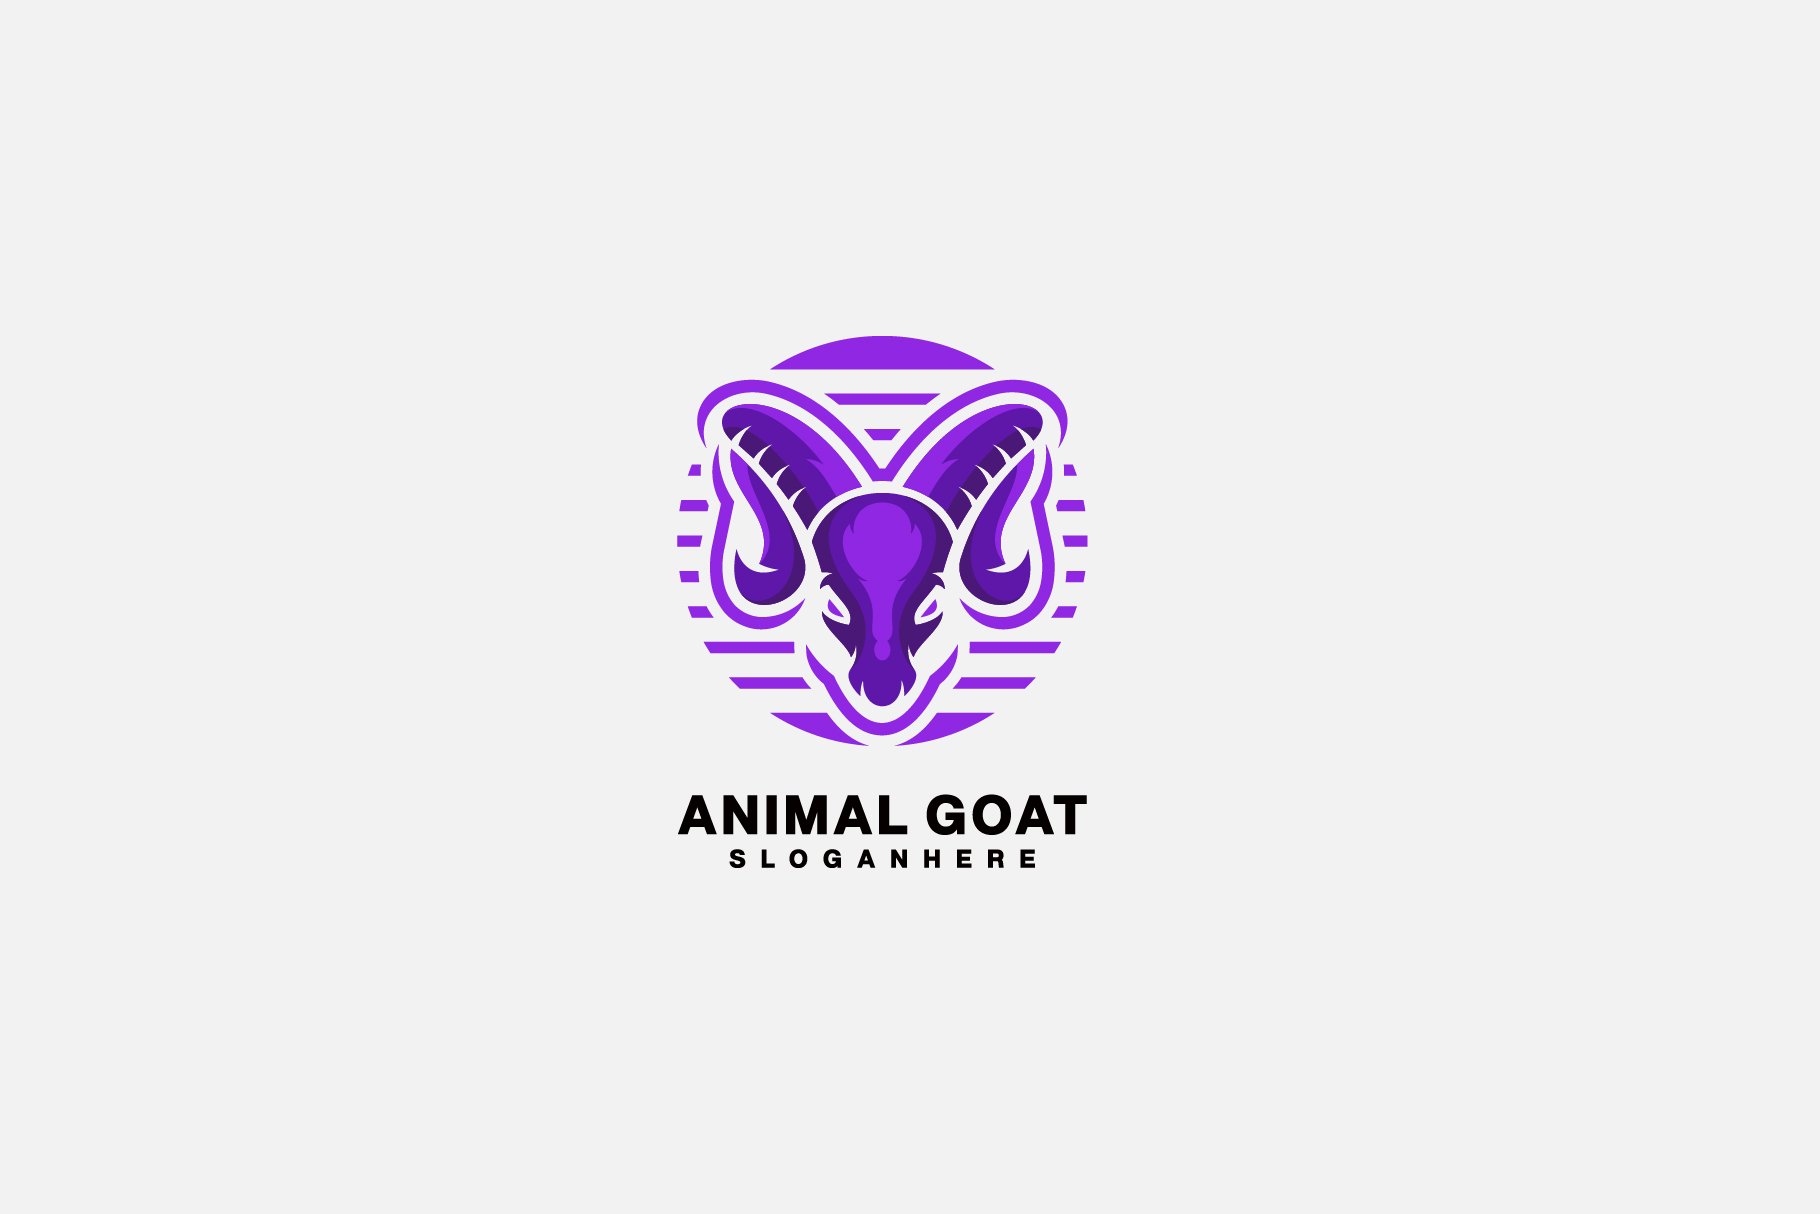 goat symbol logo icon design graphic cover image.